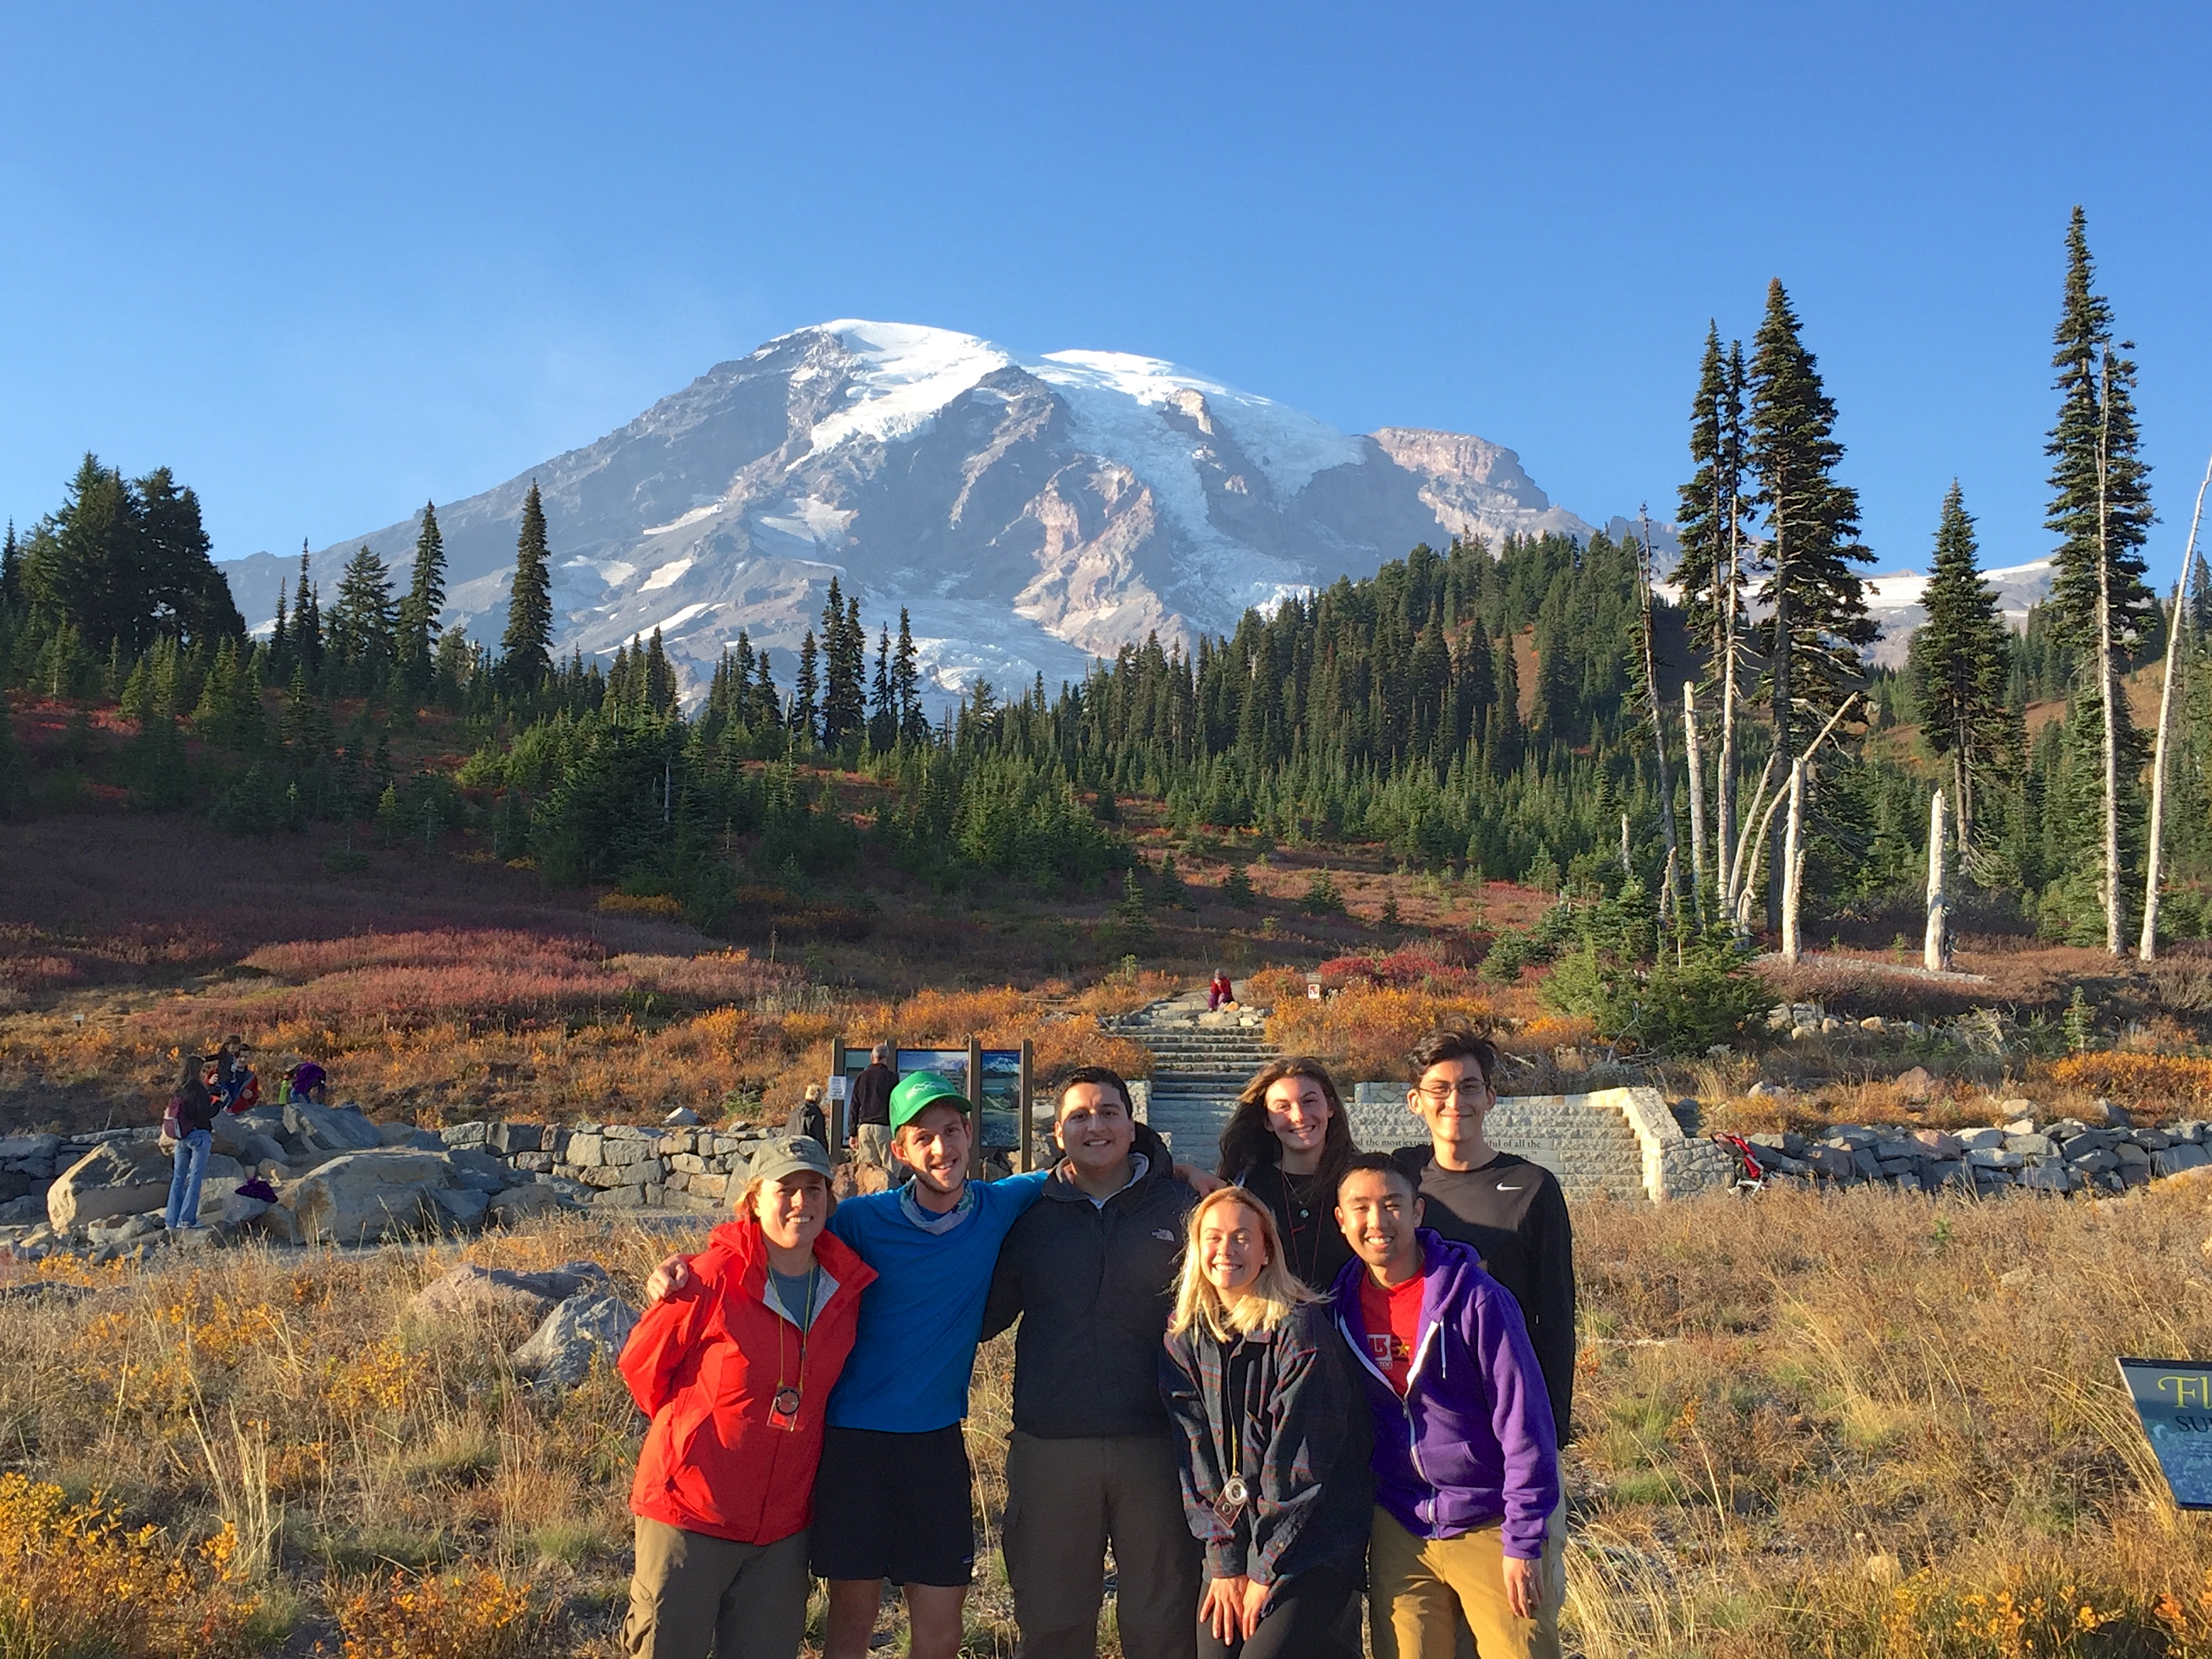 2015 field trip to Mt. Rainier National Park